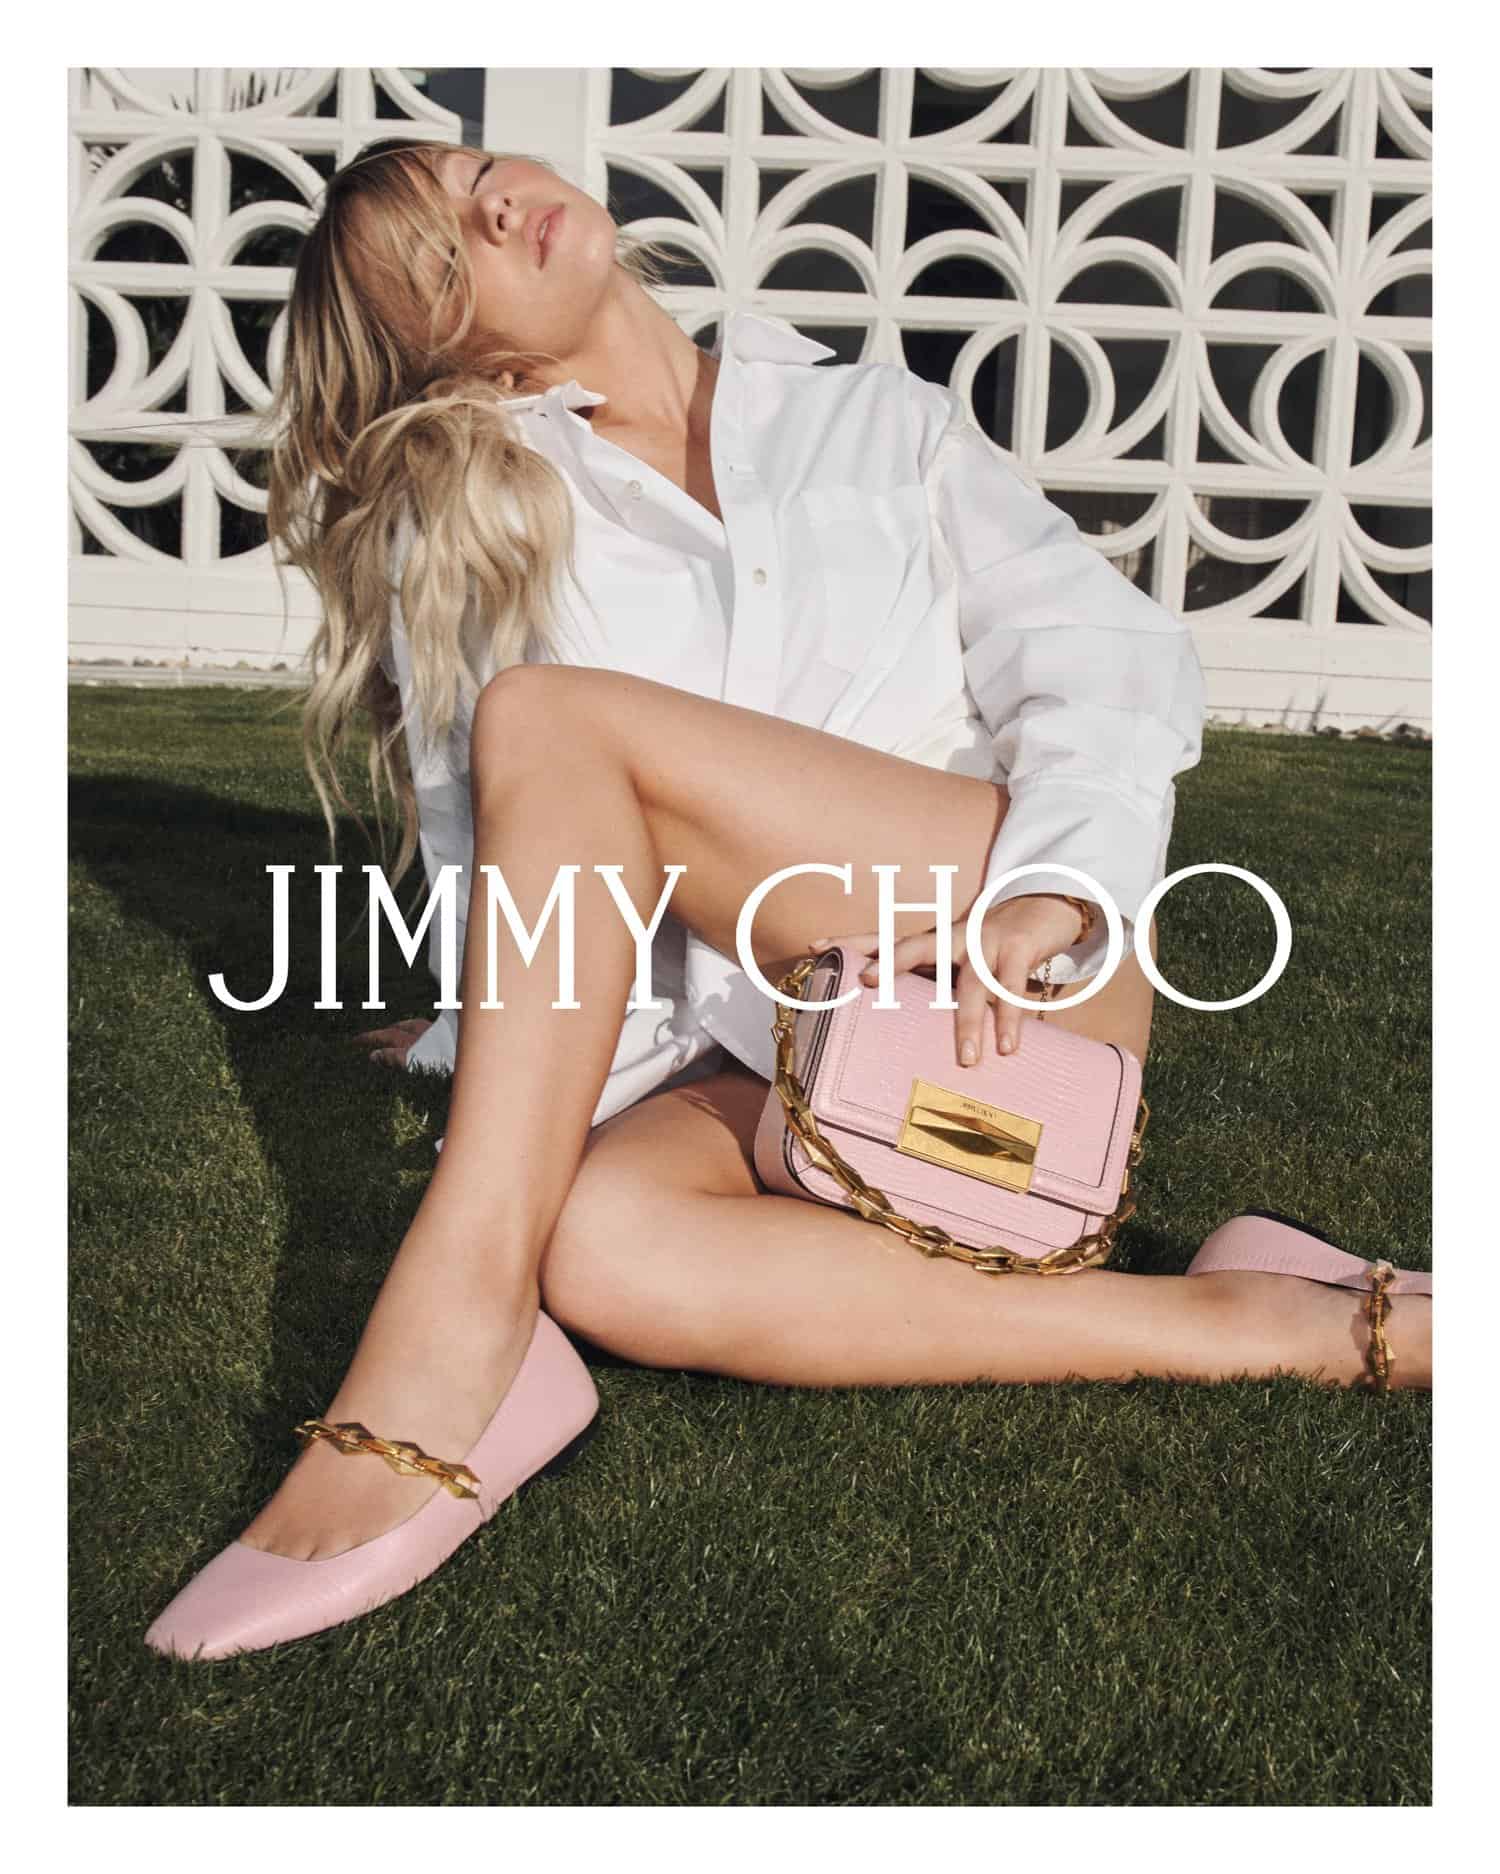 JIMMY CHOO, Sydney Sweeney, campaigns, Summer 2024, shoes, heels, bags, accessories